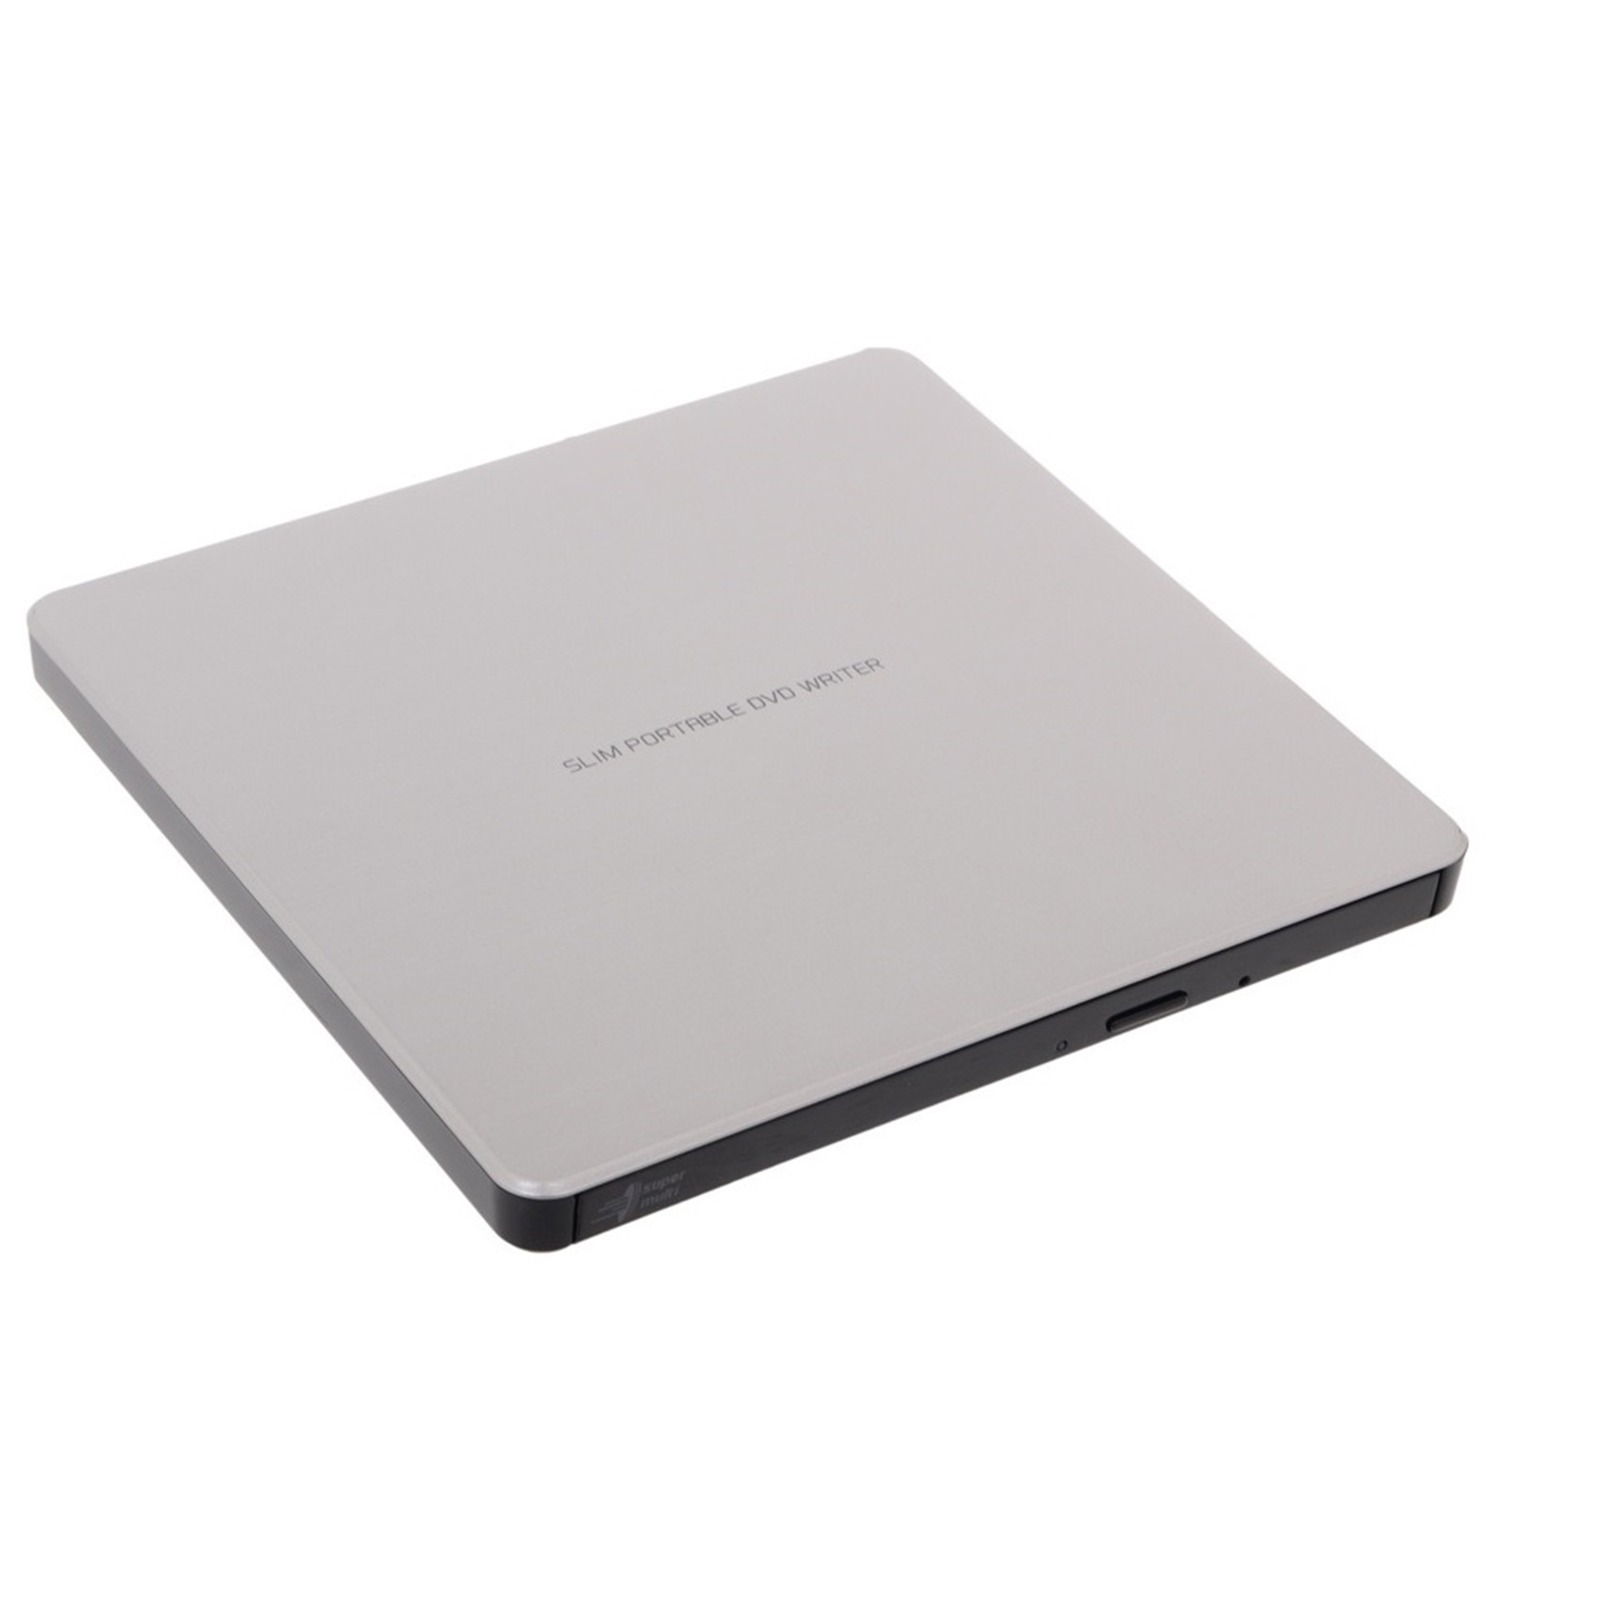 GP60NS60 LG Hitachi-LG GP60NS60 8x DVD-RW USB 2.0 Silver Slim External Optical Drive